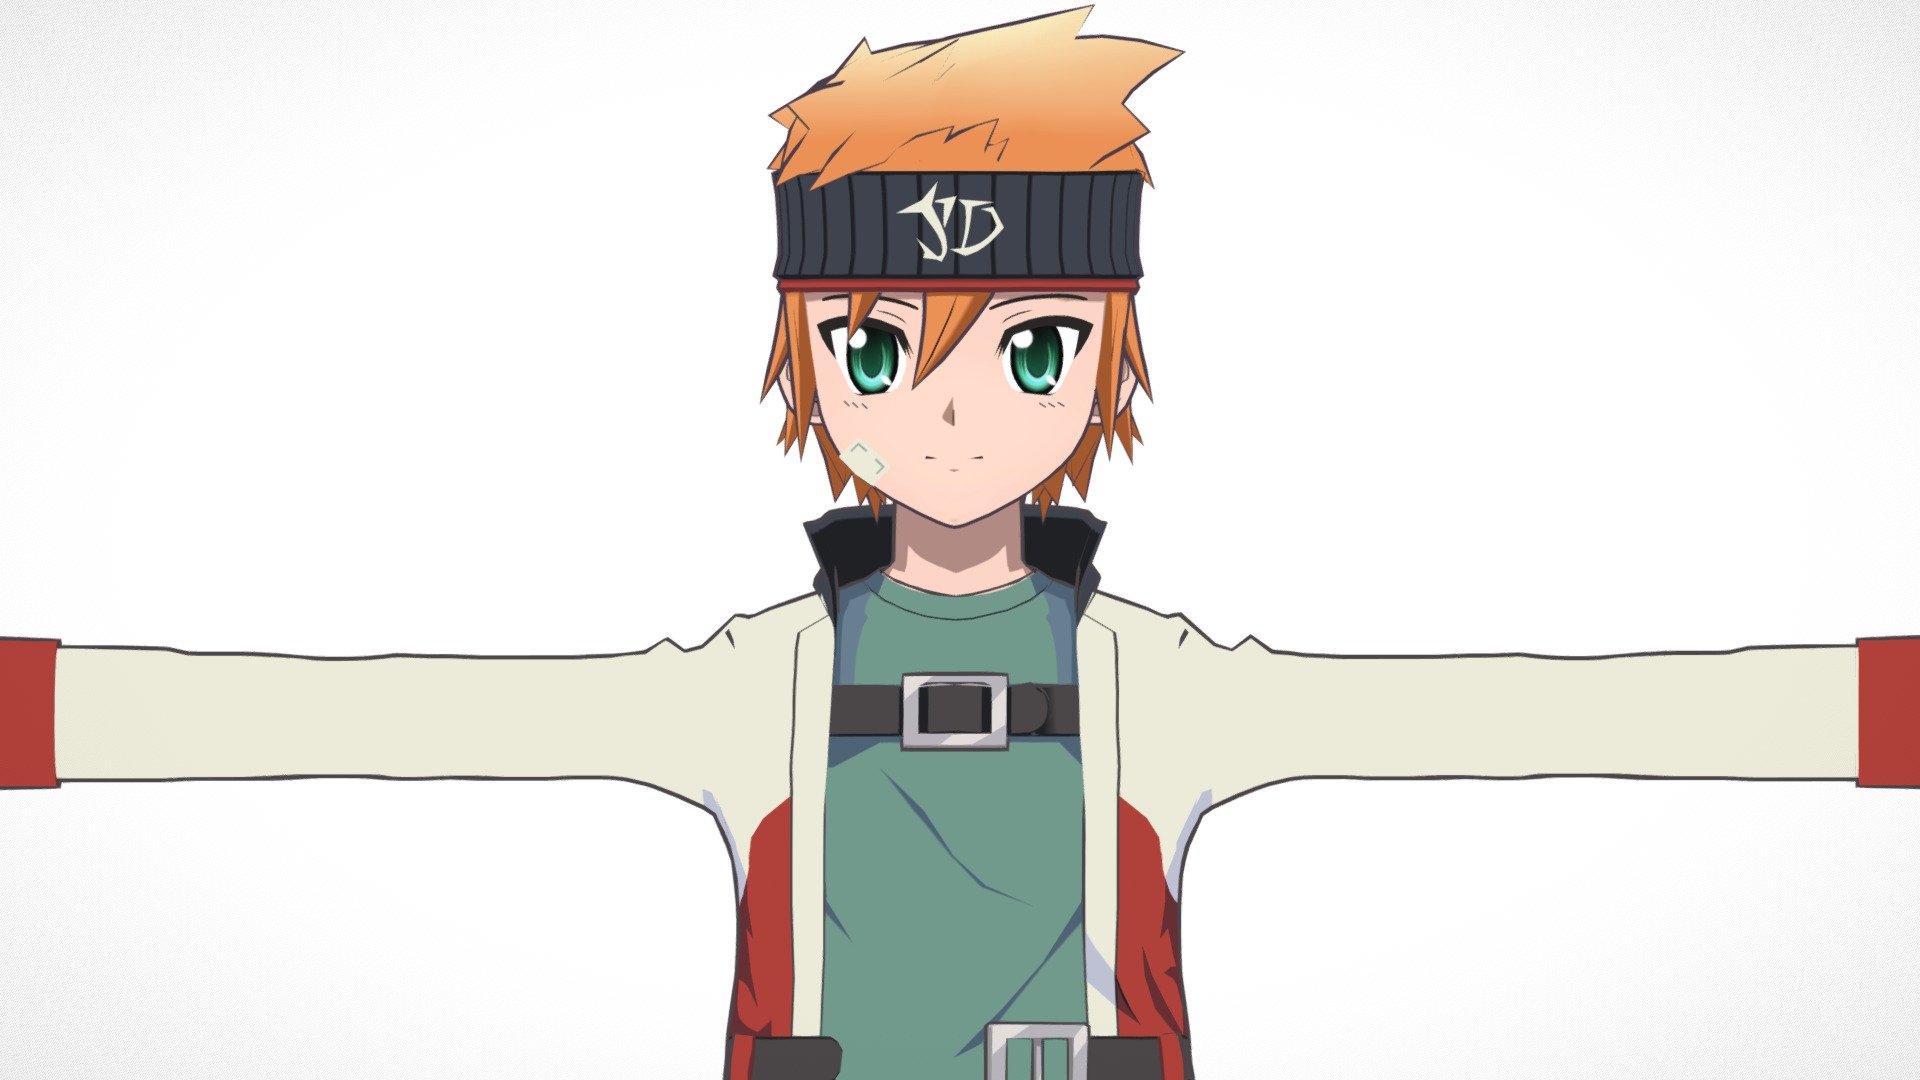 Cute Anime Boy Character - Fujita 3D Model by CGAnime